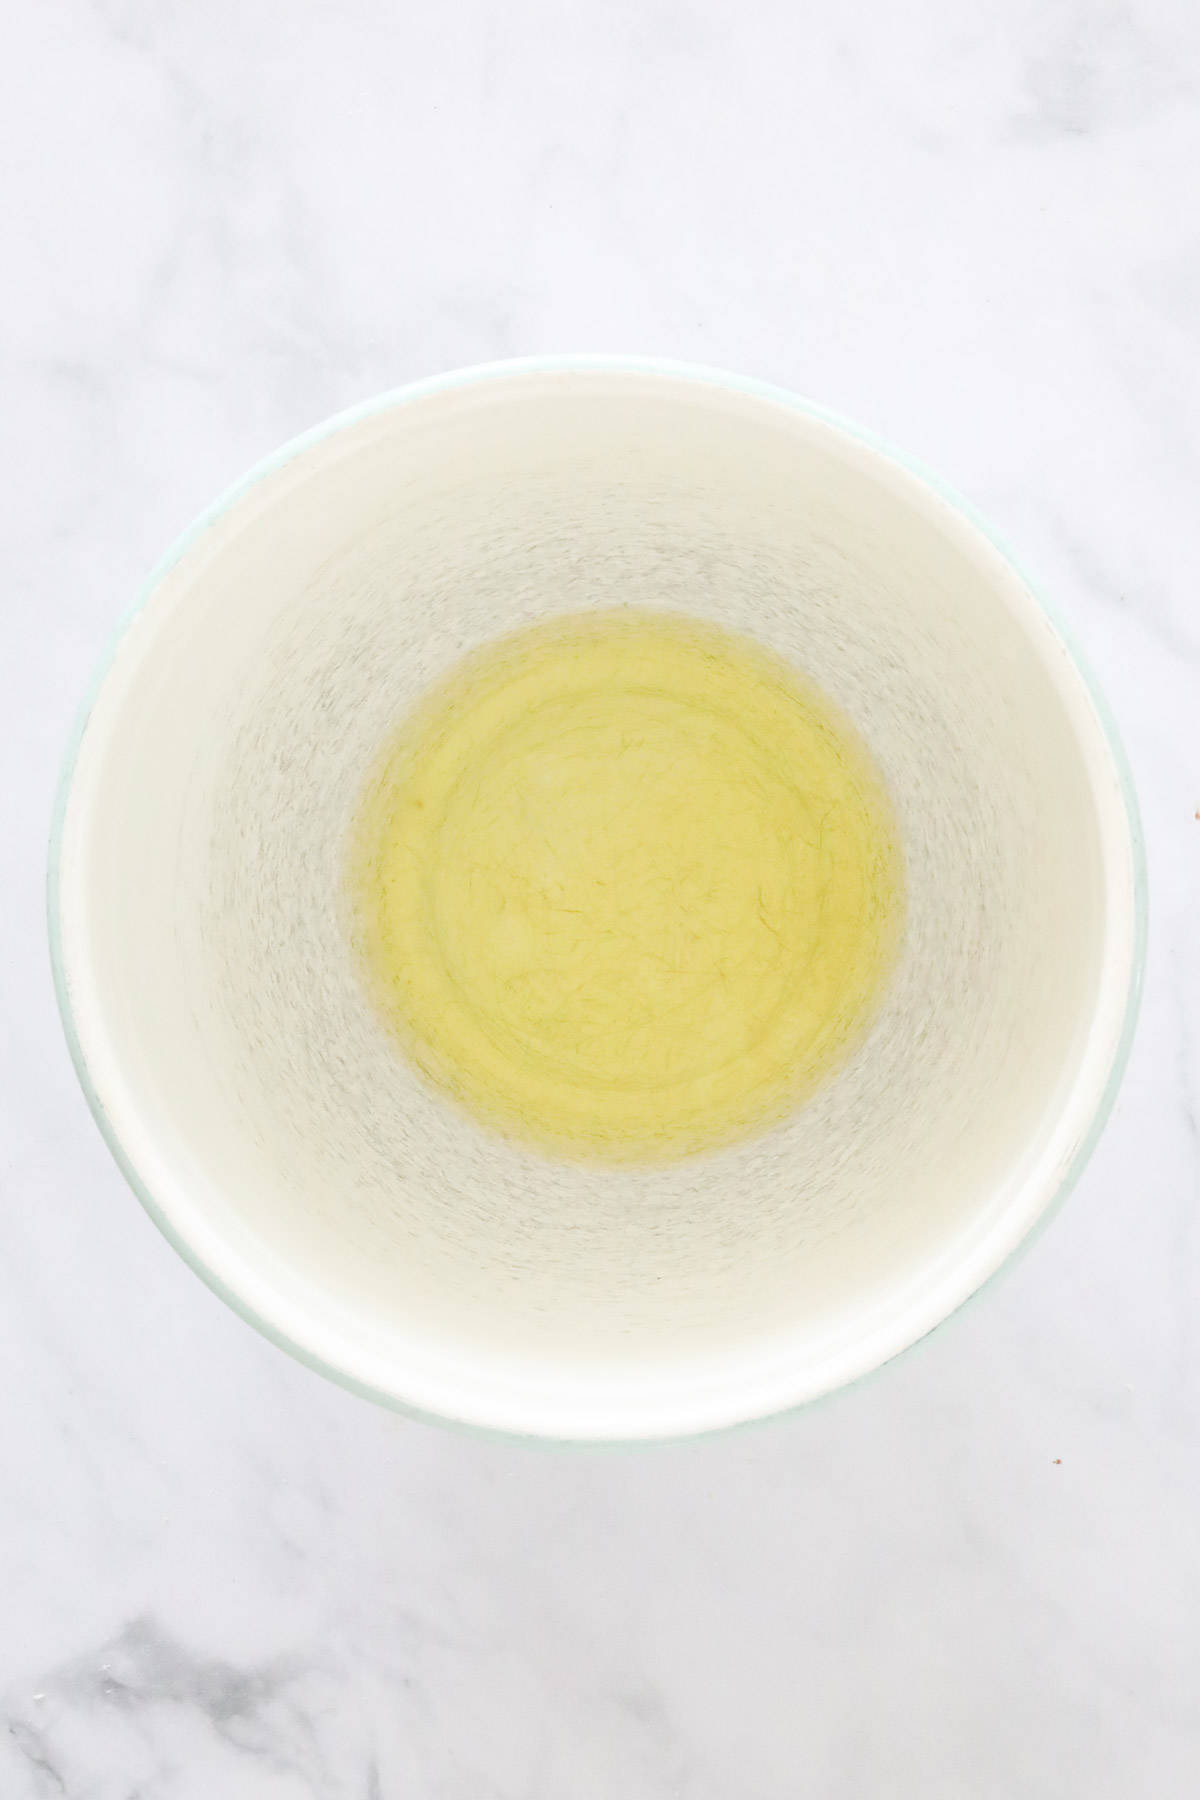 Egg whites in a bowl.